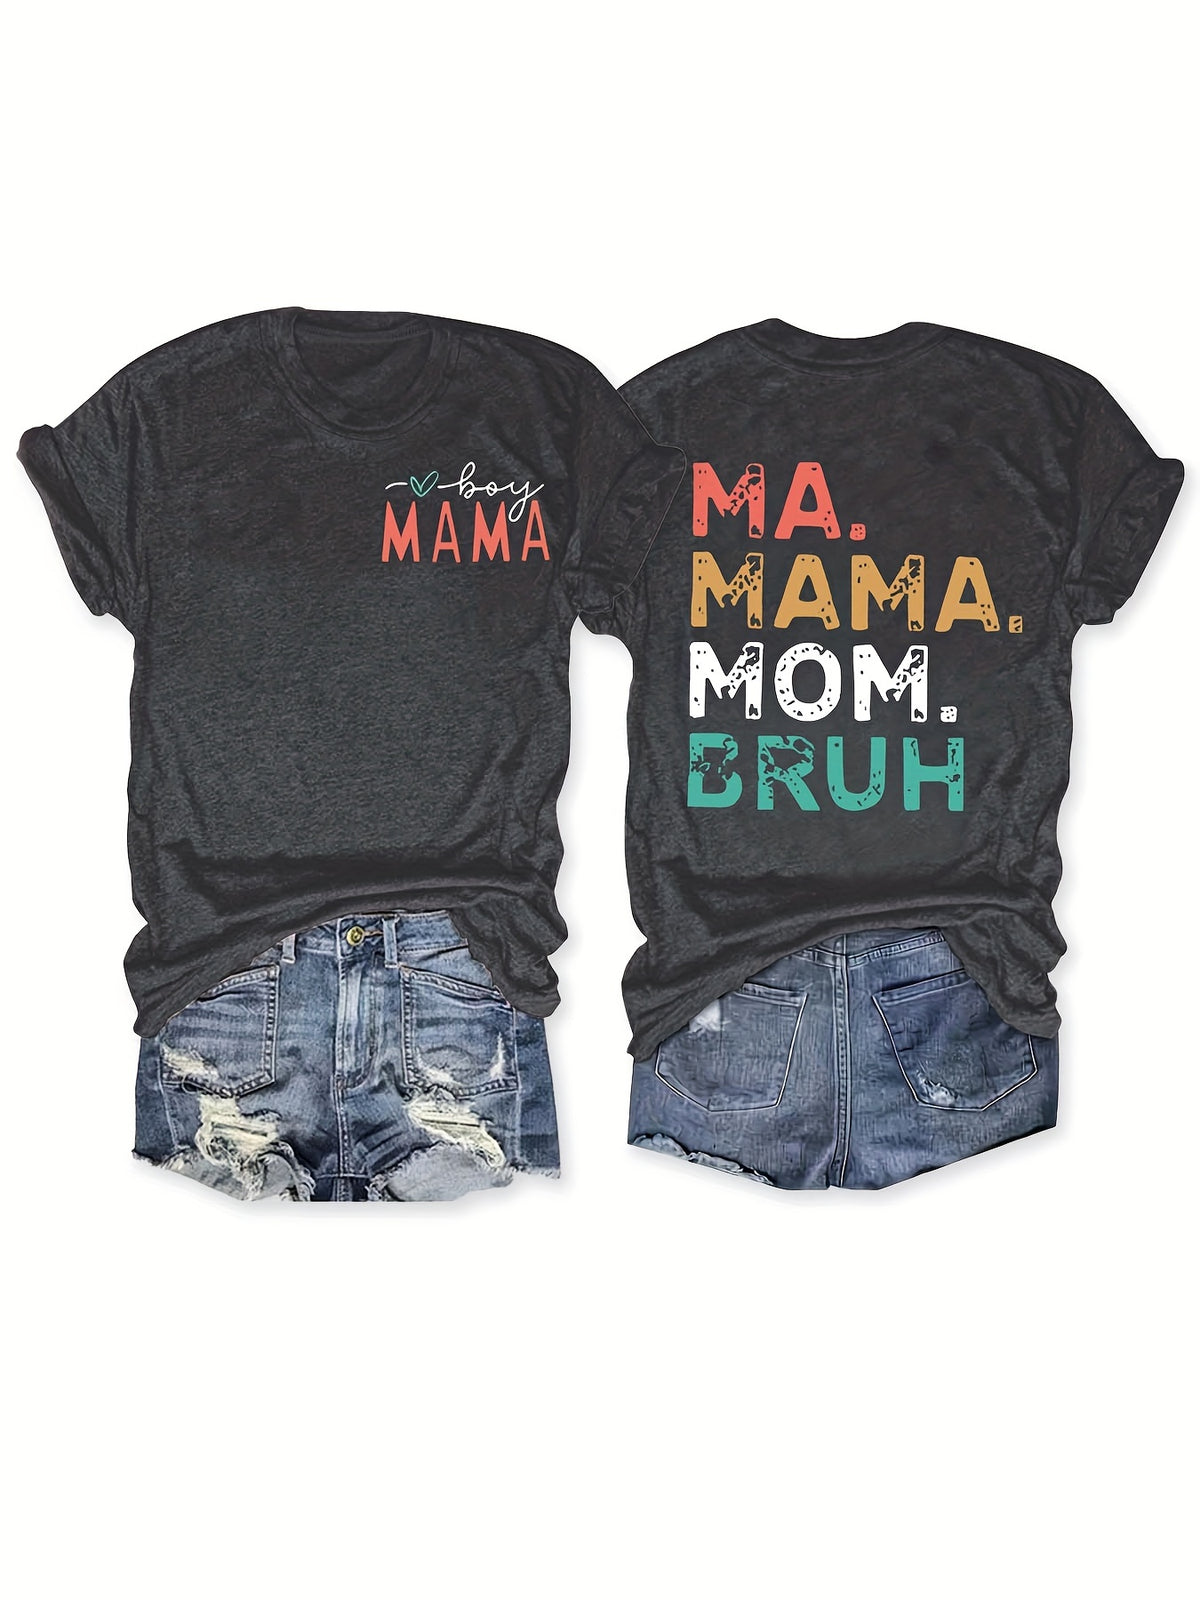 MA.MAMA.MOM.BRUH T-Shirt